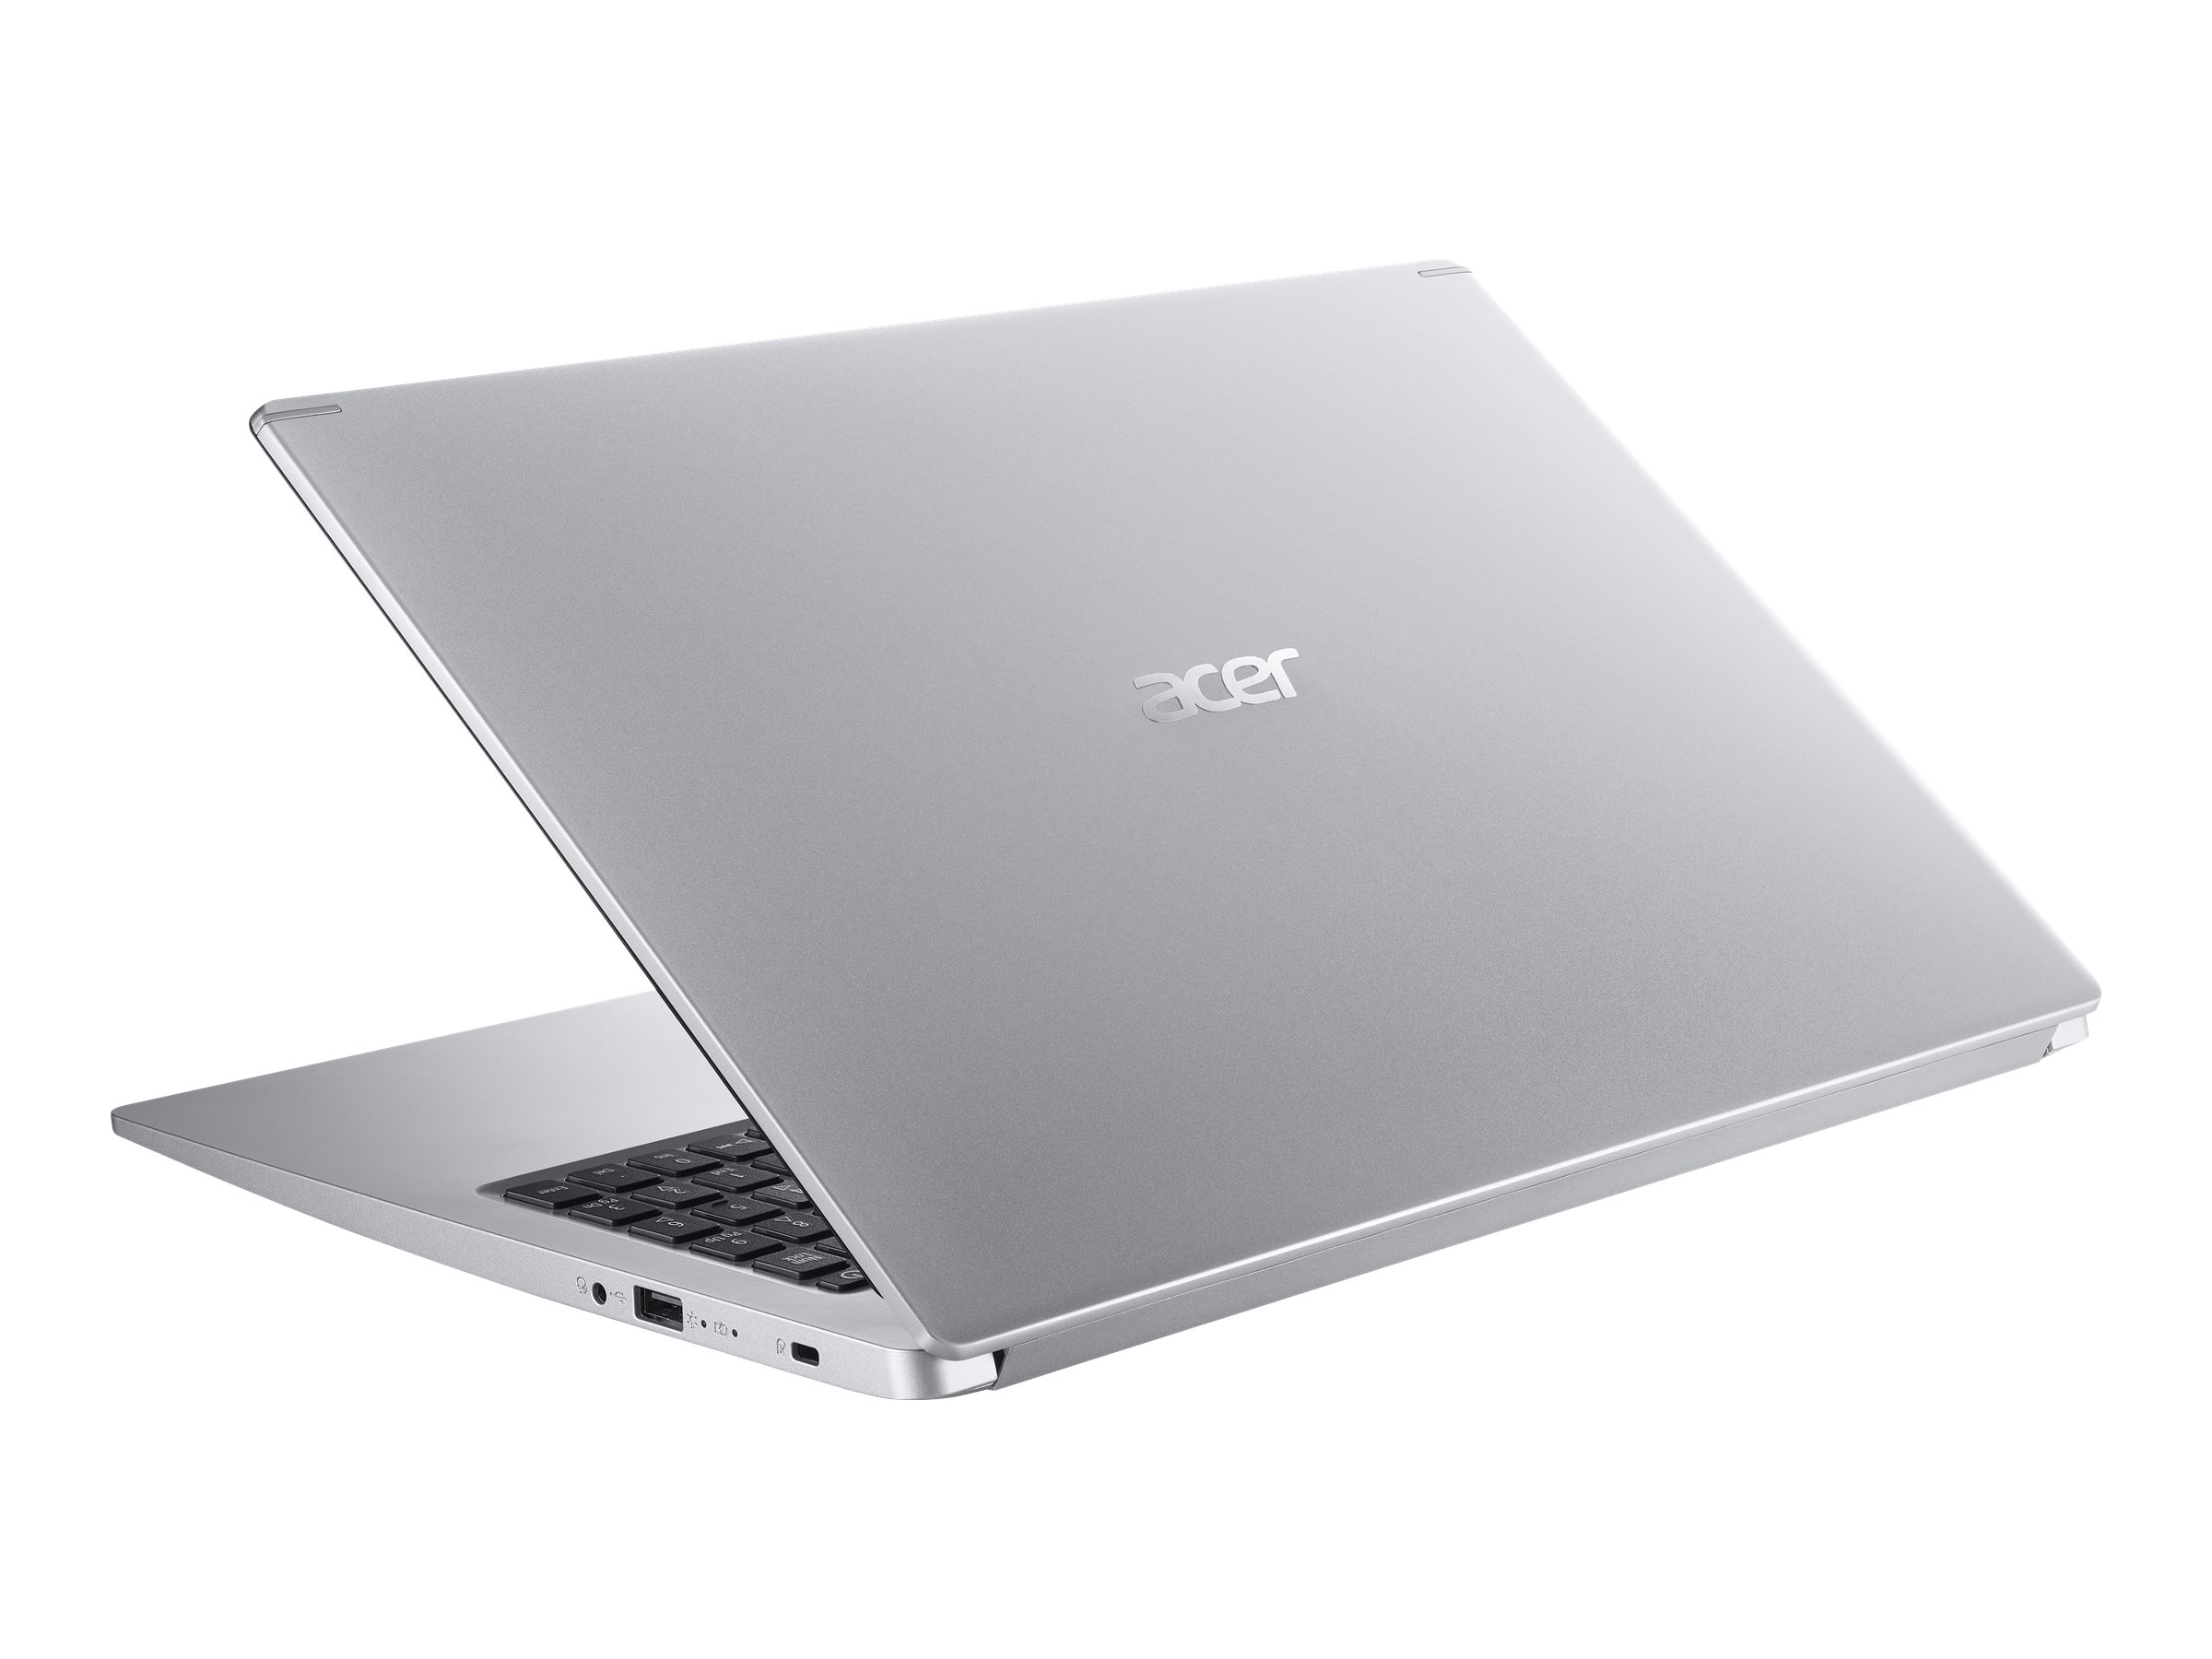 Acer Aspire 5 A515-44-R41B - Ryzen 5 4500U / 2.3 GHz - Win 10 Home 64-bit - 8 GB RAM - 256 GB SSD - 15.6" IPS 1920 x 1080 (Full HD) - Radeon HD - Wi-Fi, Bluetooth - pure silver - kbd: US International - image 2 of 8